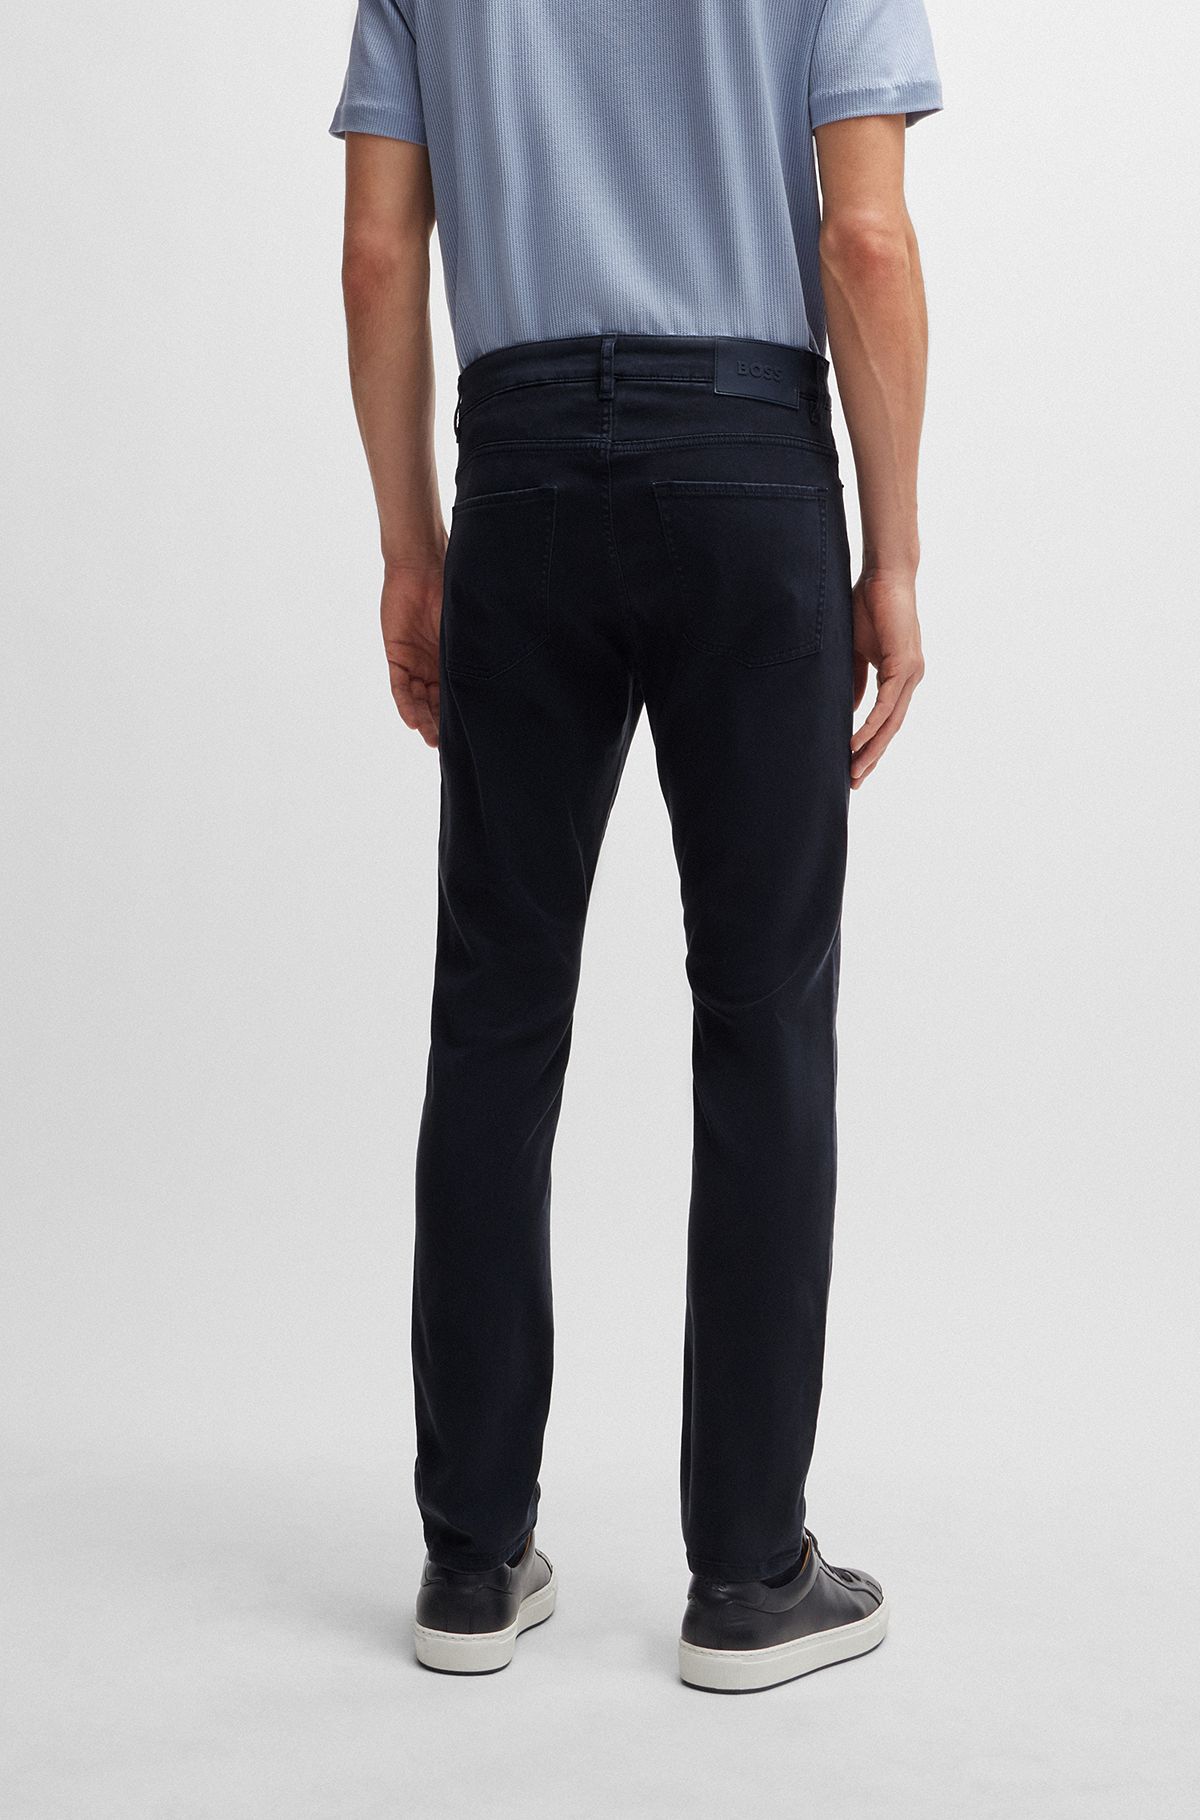 Delaware Slim-fit jeans in soft stretch denim, Dark Blue